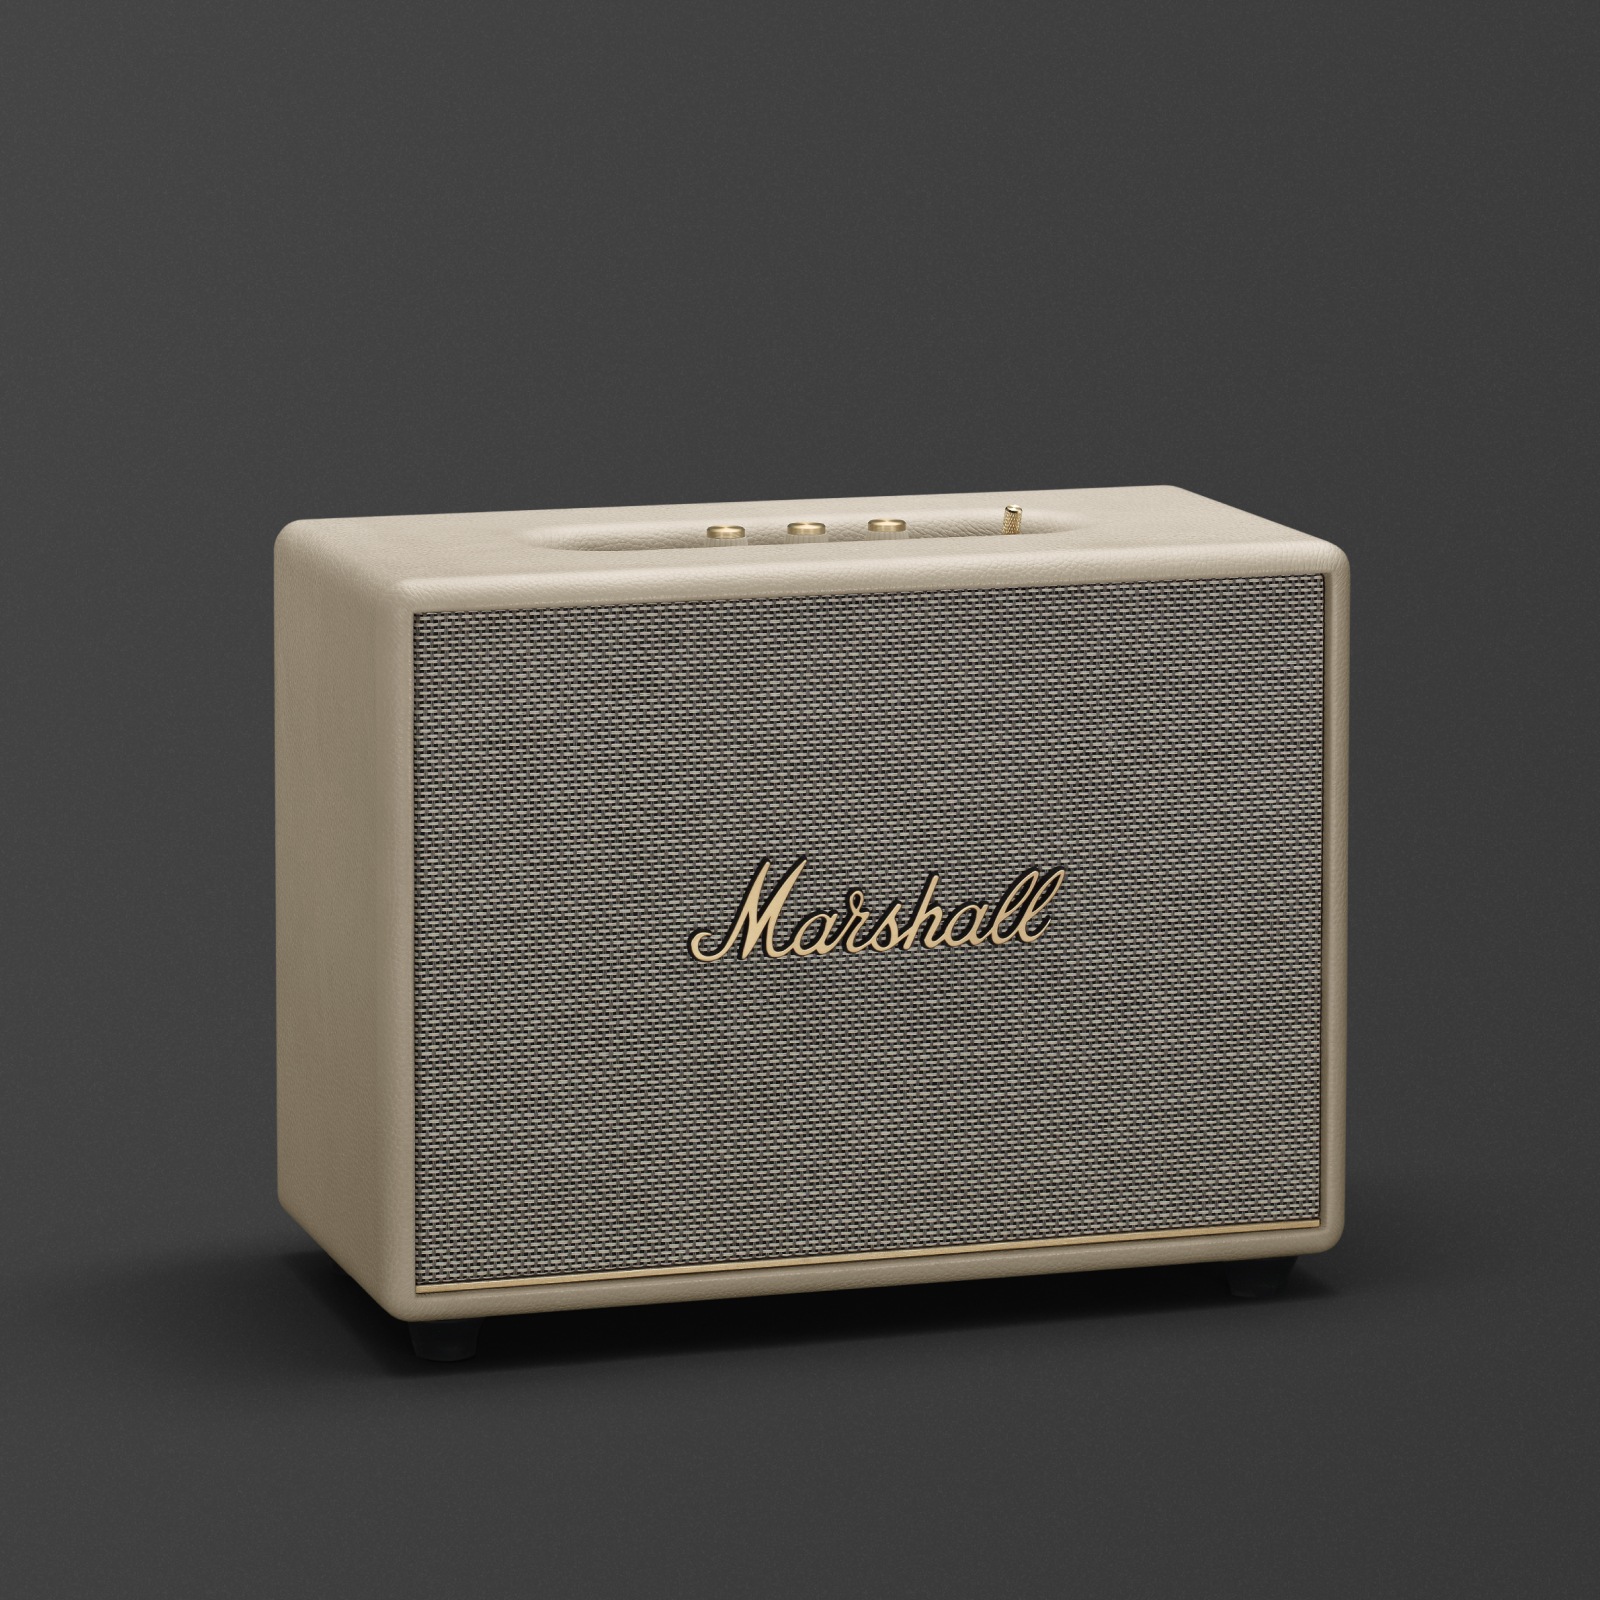 Enceinte Bluetooth Marshall Woburn III Cream. Cette enceinte Marshall, également disponible en blanc, est le modèle Woburn III Cream.